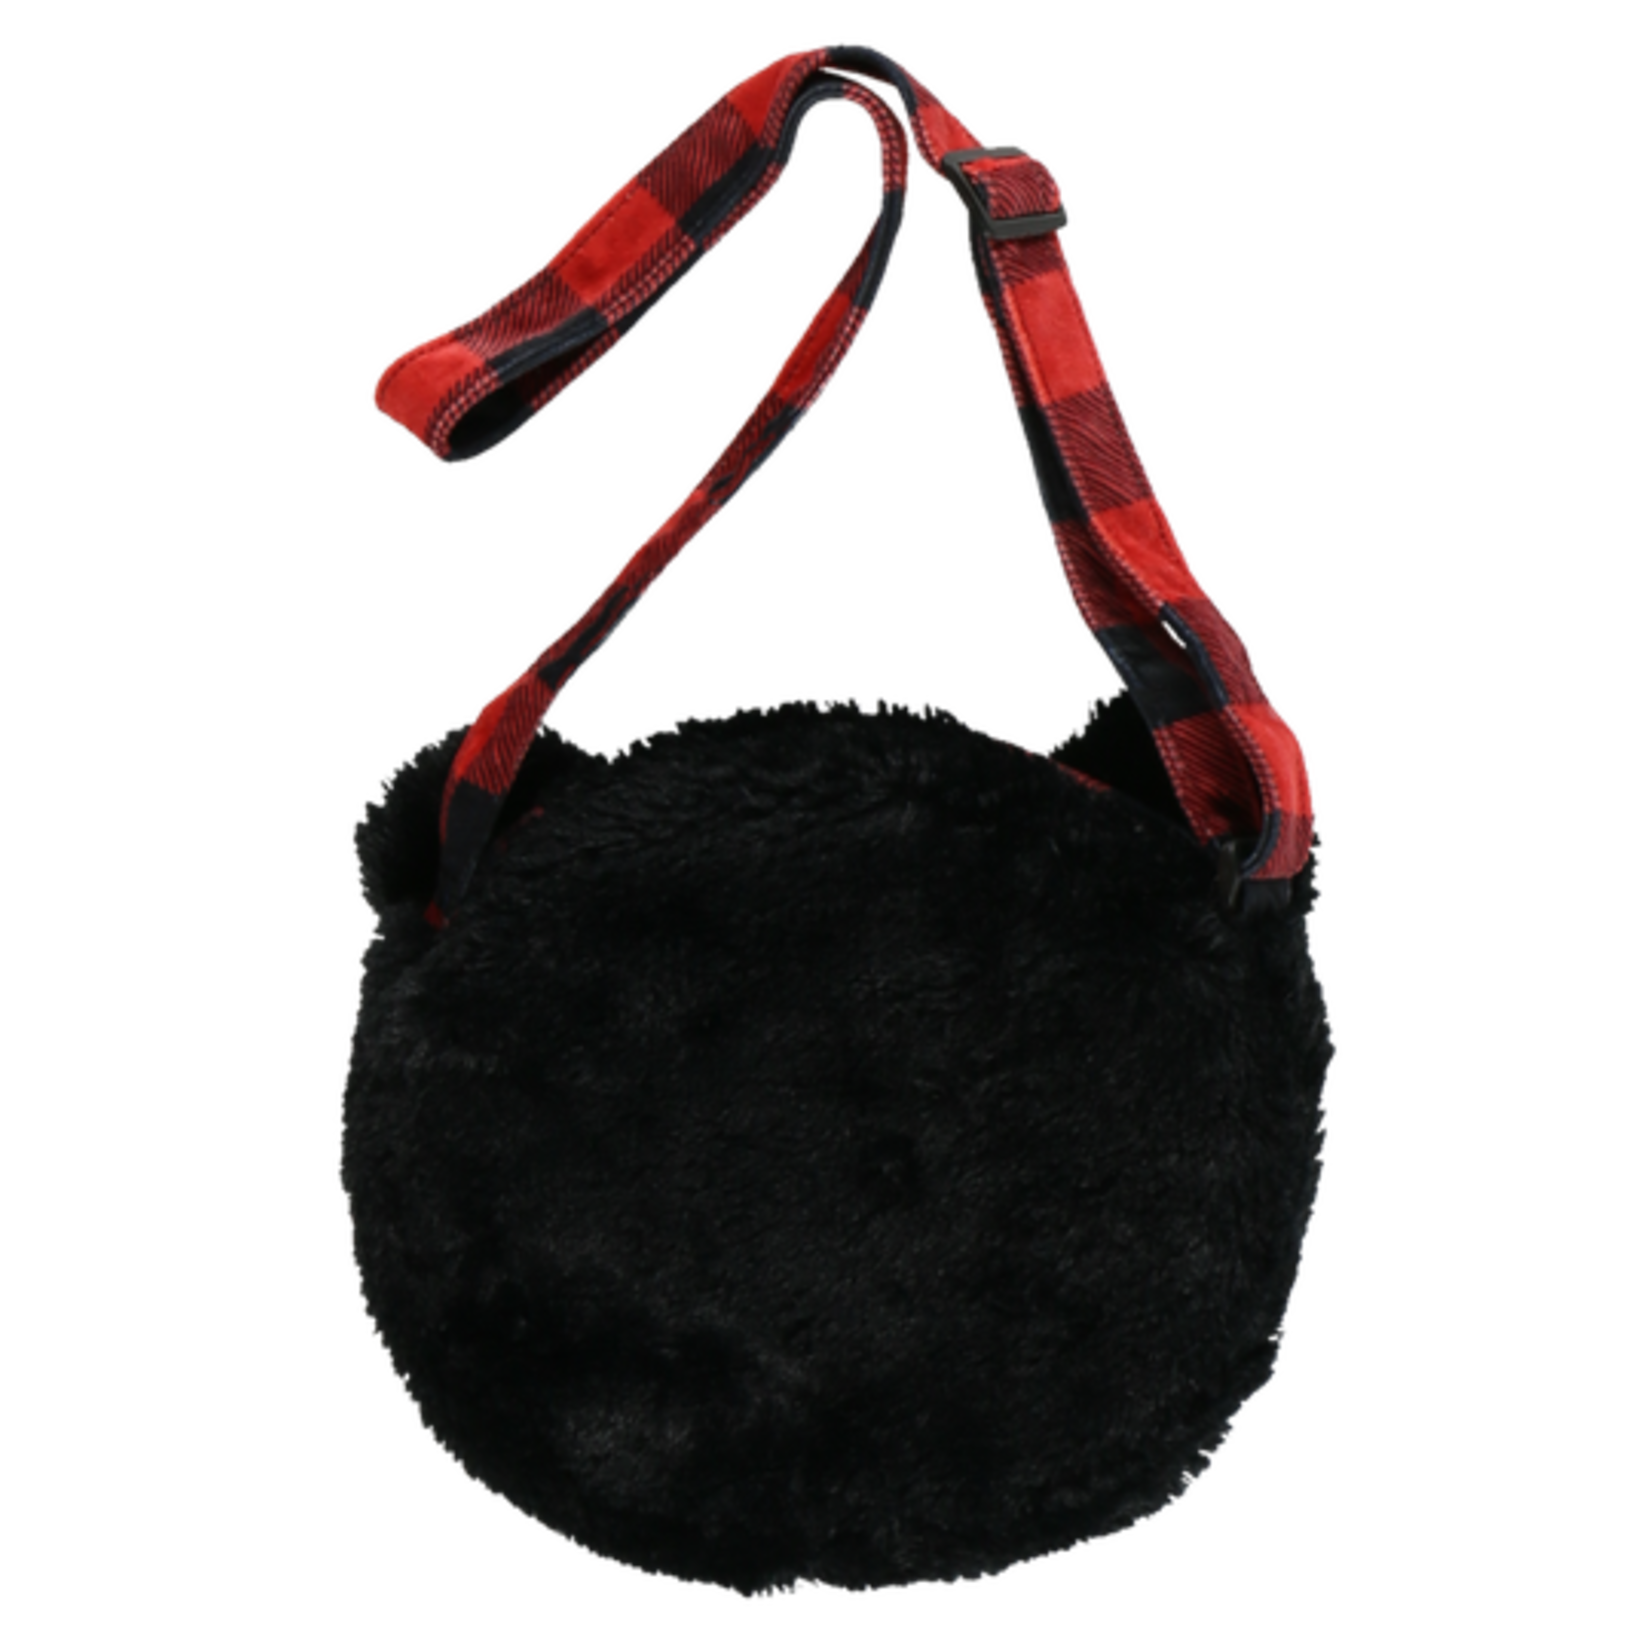 Black bear girl purse